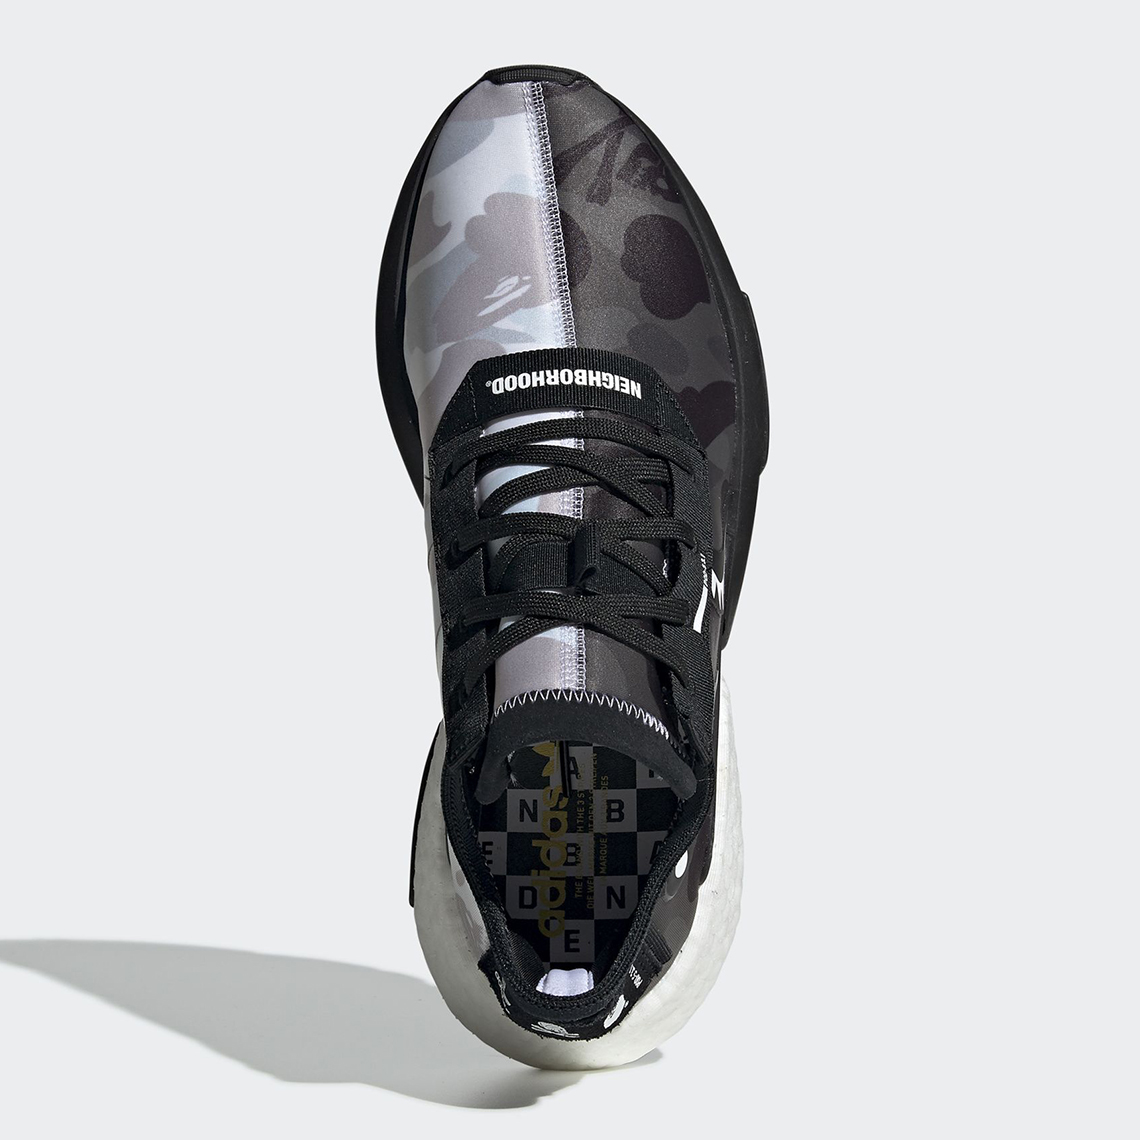 Bape Neighborhood adidas POD s3.1 EE9431 Info | SneakerNews.com